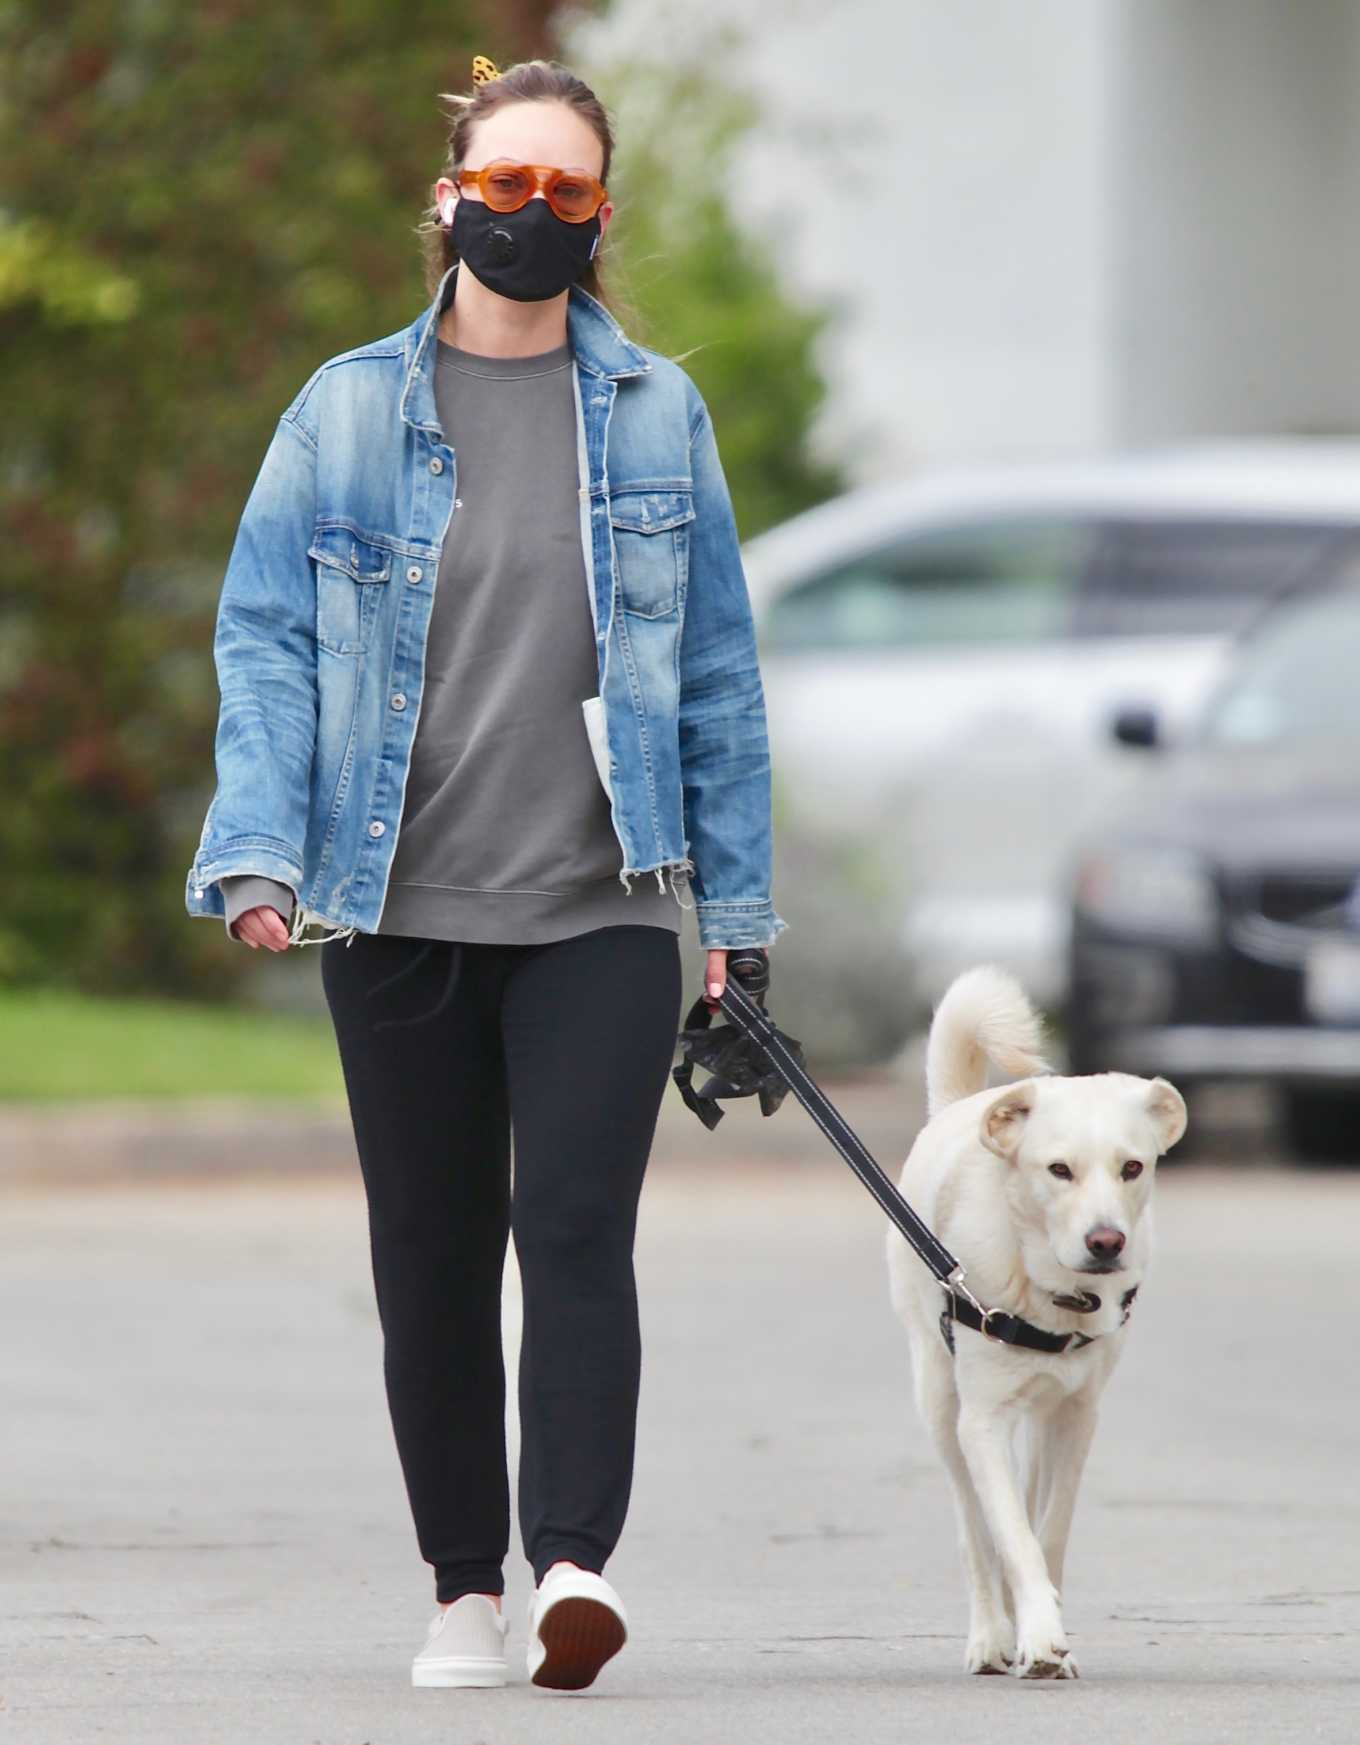 Olivia Wilde â€“ Walks her dog neat her neighborhood in Los Angeles